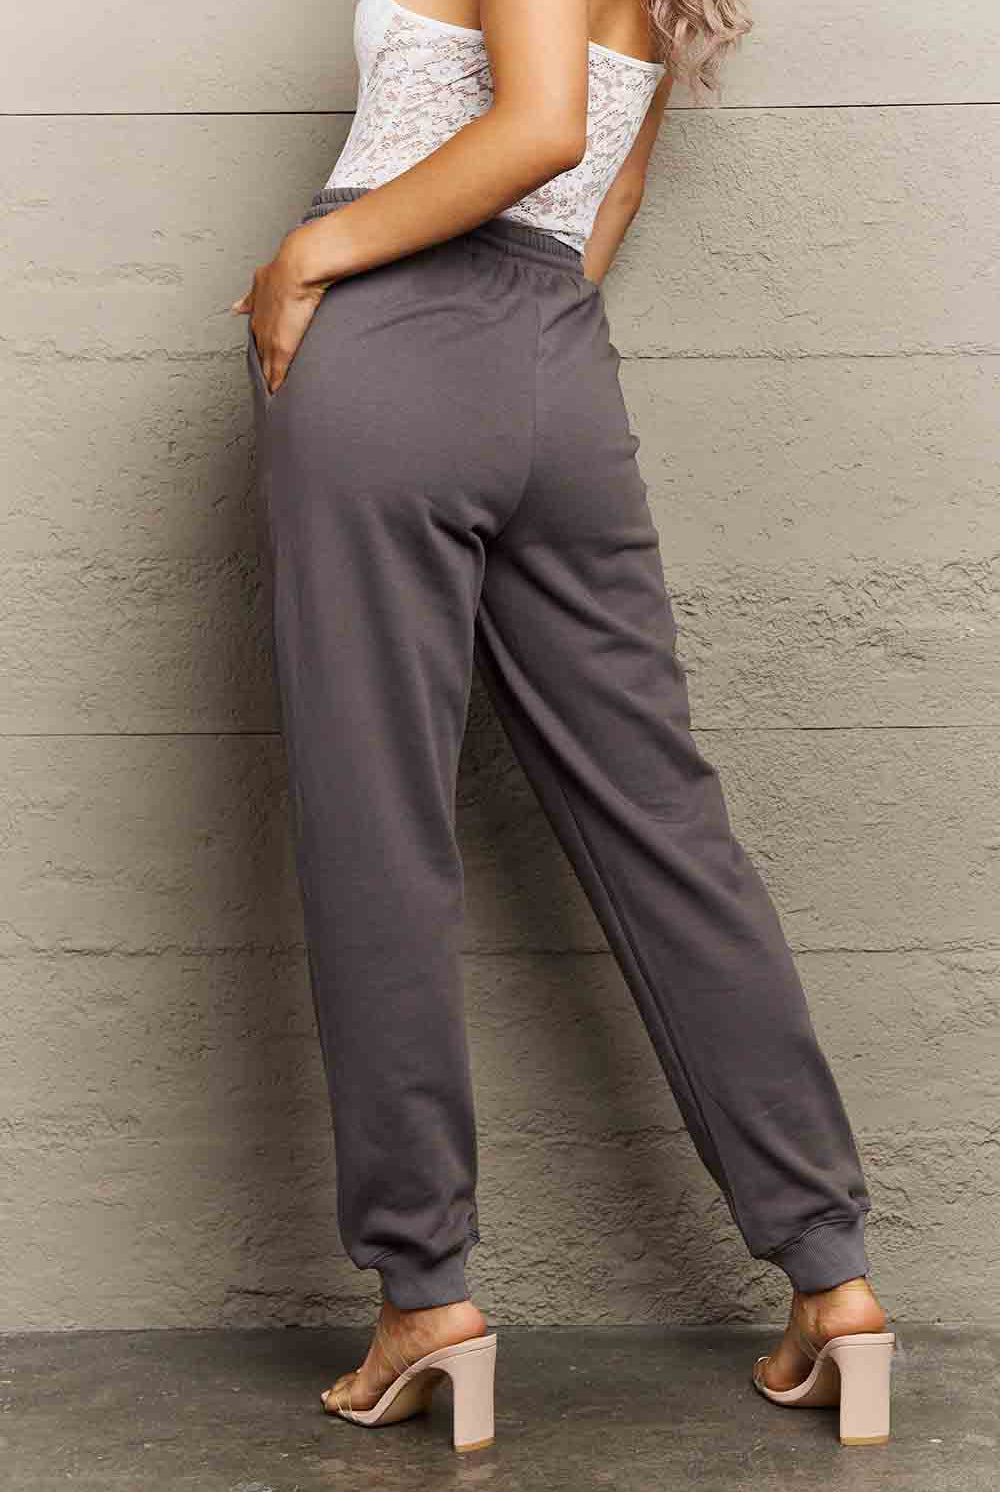 Dim Gray Simply Love Full Size CELESTIAL DREAMER Graphic Sweatpants Sweatpants